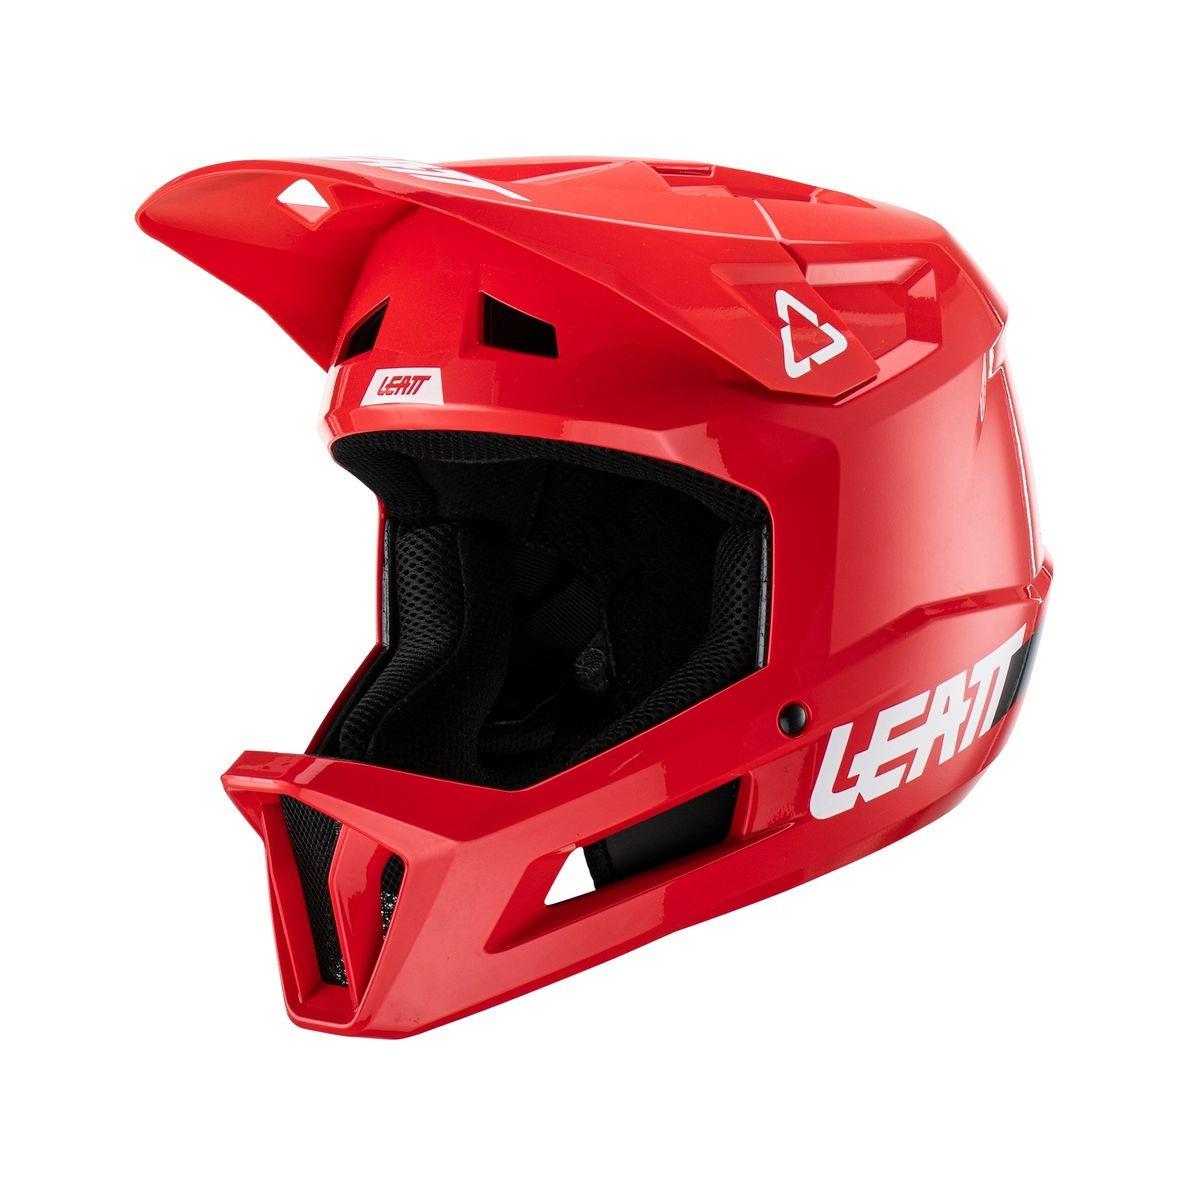 Gravity 1.0 Kids MTB Fullface Helmet Red Size XS (53-54cm)